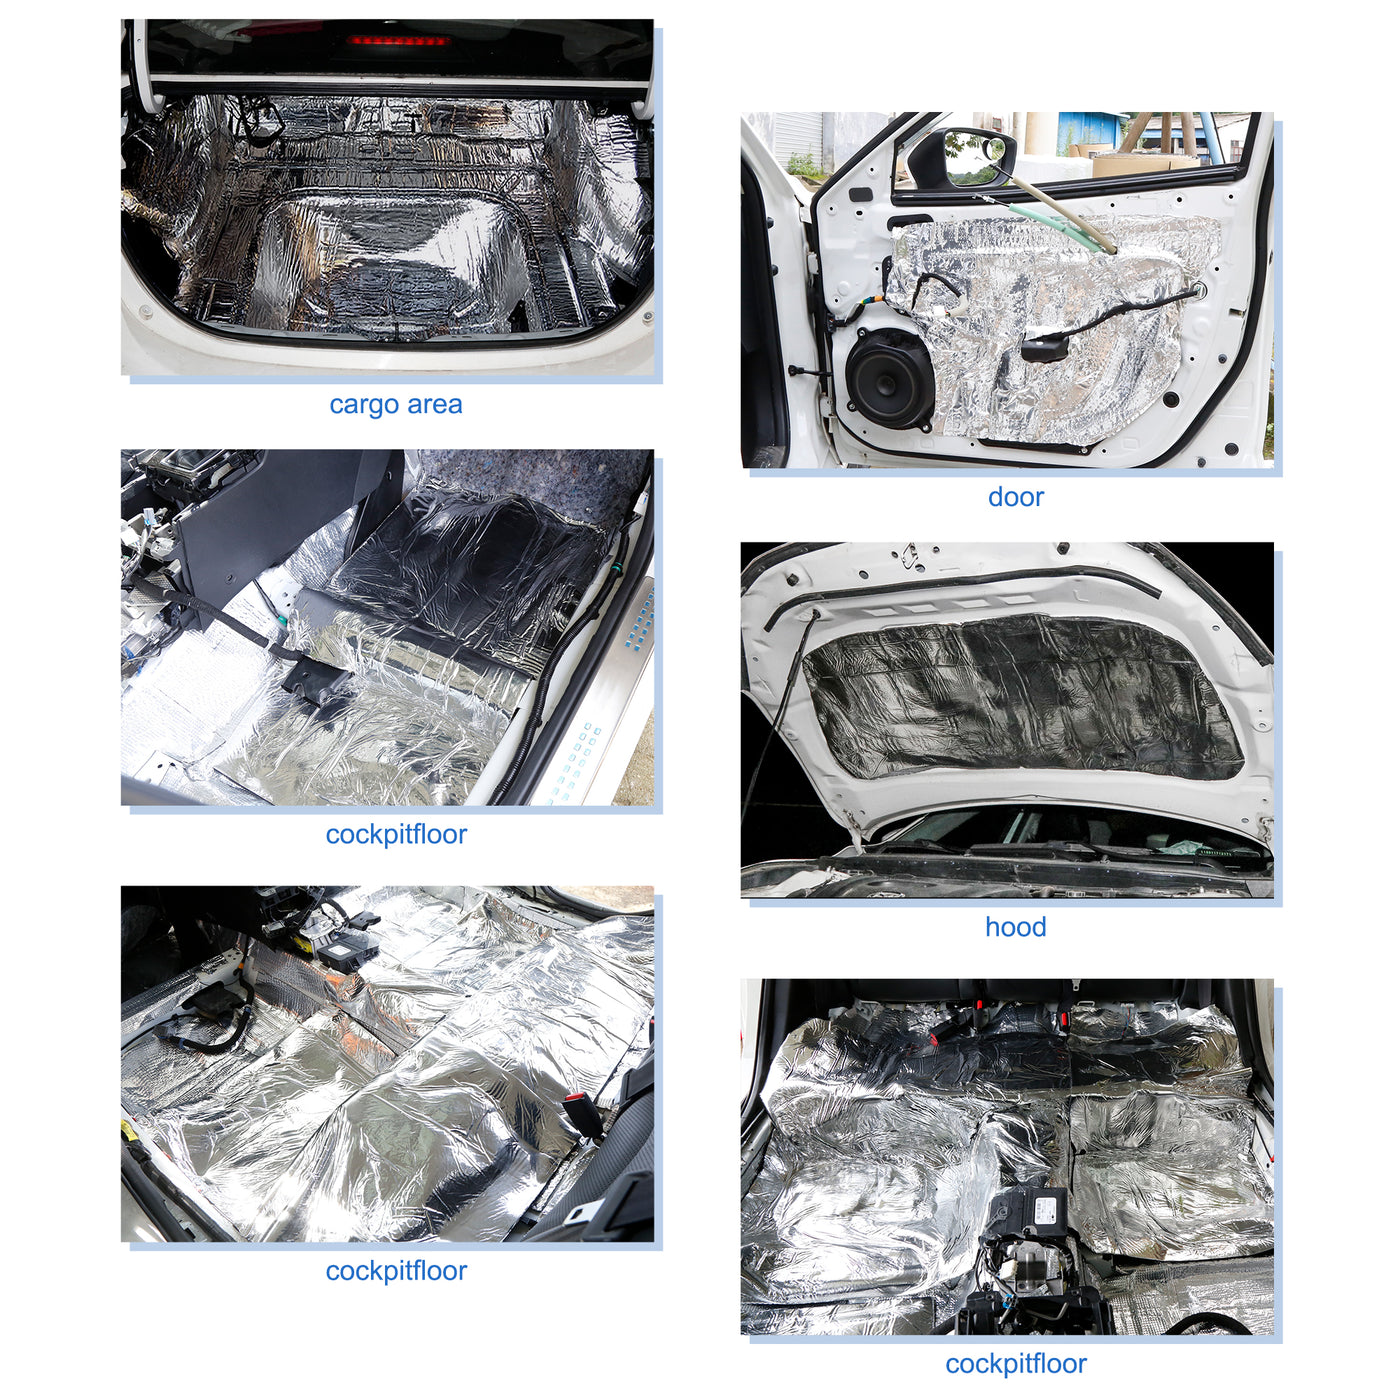 6mm 236mil Thick Aluminum Foil Muffler Cotton Car Auto Tailgate Sound  Insulation Deadener Soundproof Mat Pad 